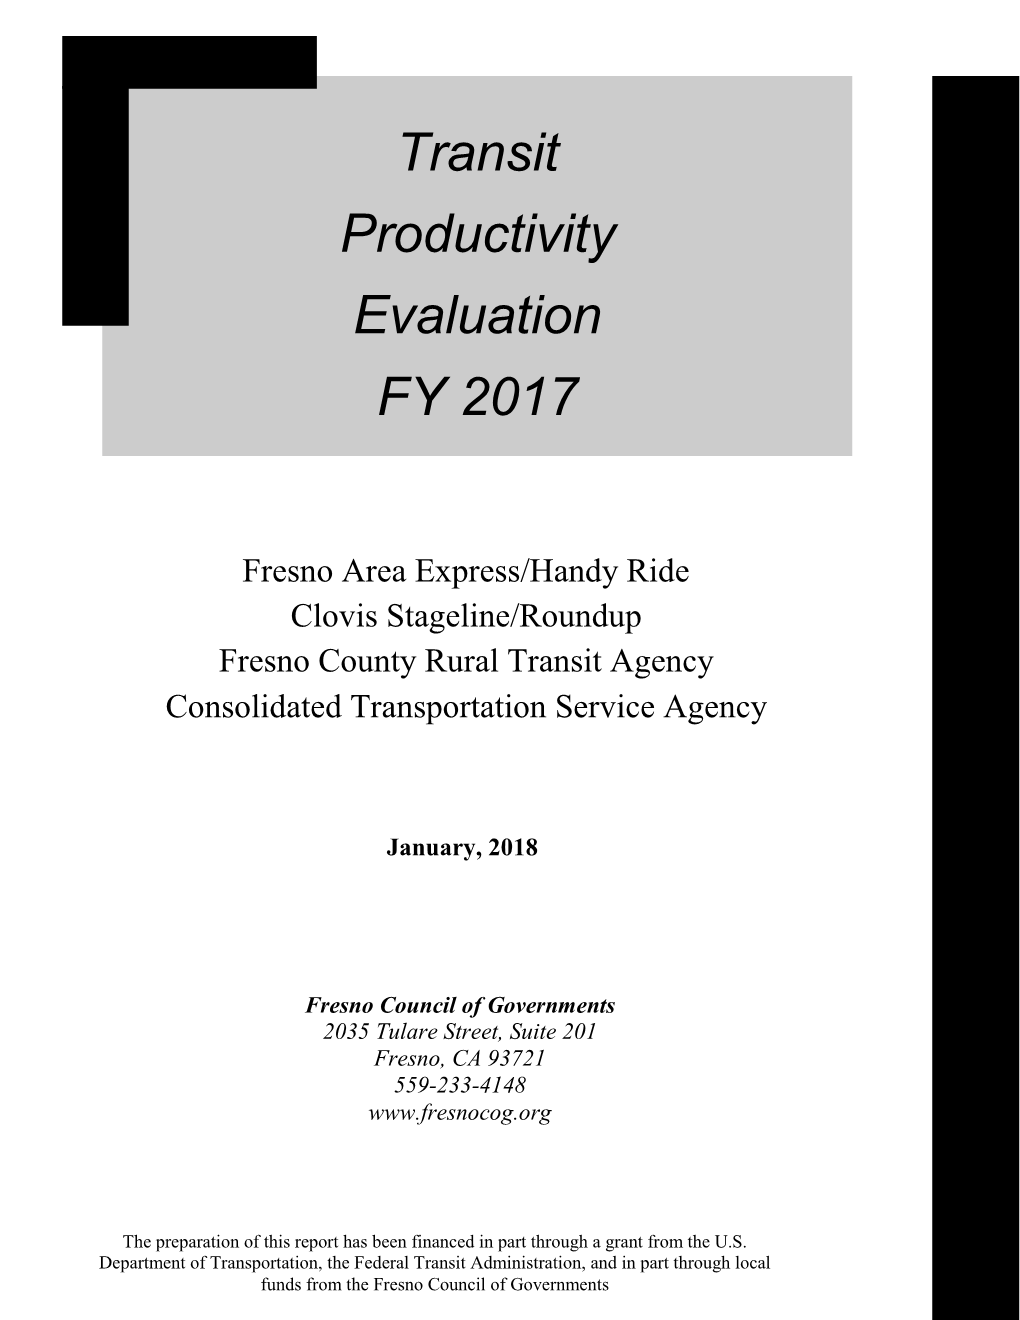 Transit Productivity Evaluation FY 2017